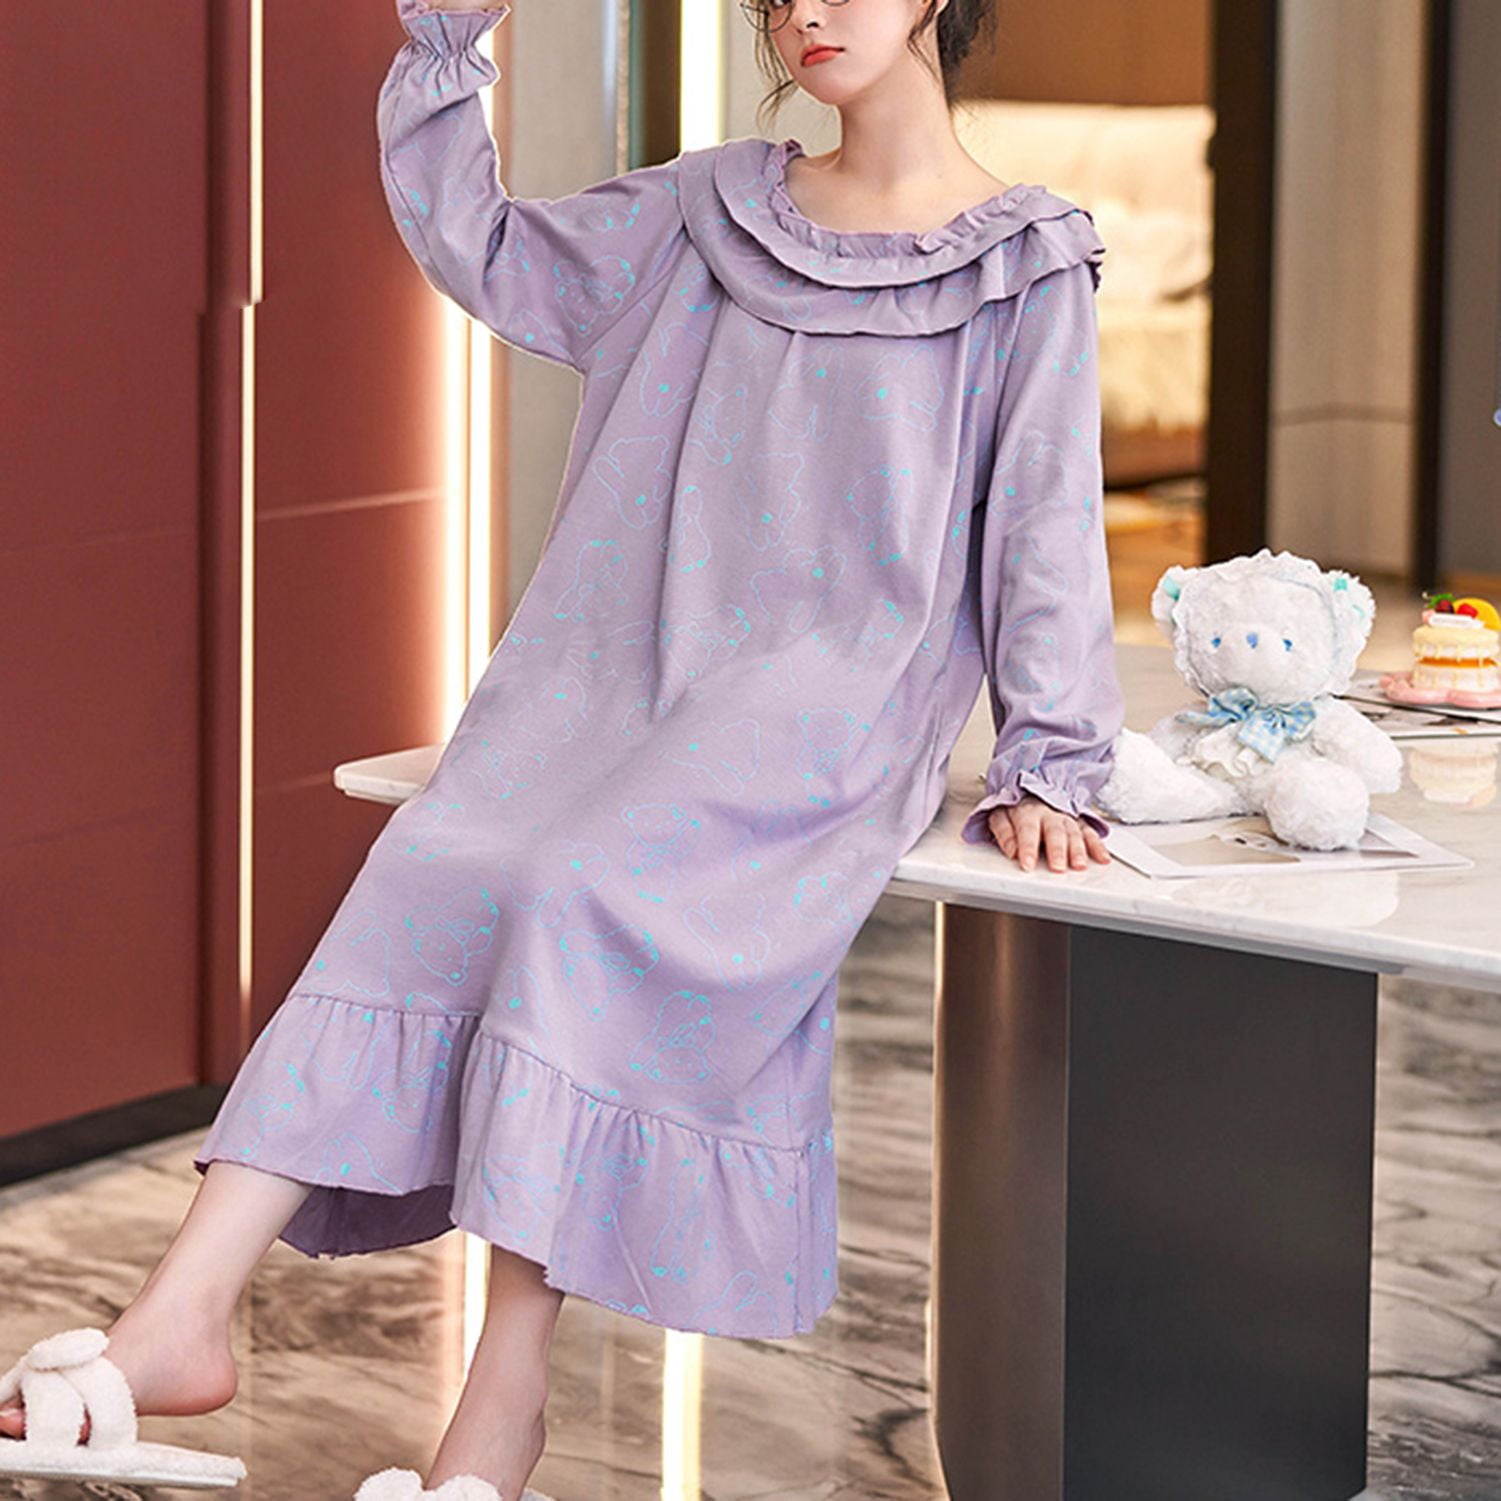 Homgro Women's Soft Nightgown Frilly Sleep Dress Summer Short Sleeve Comfy  Midi Sleepwear with Built in Shelf Bra Yellow X-Small 